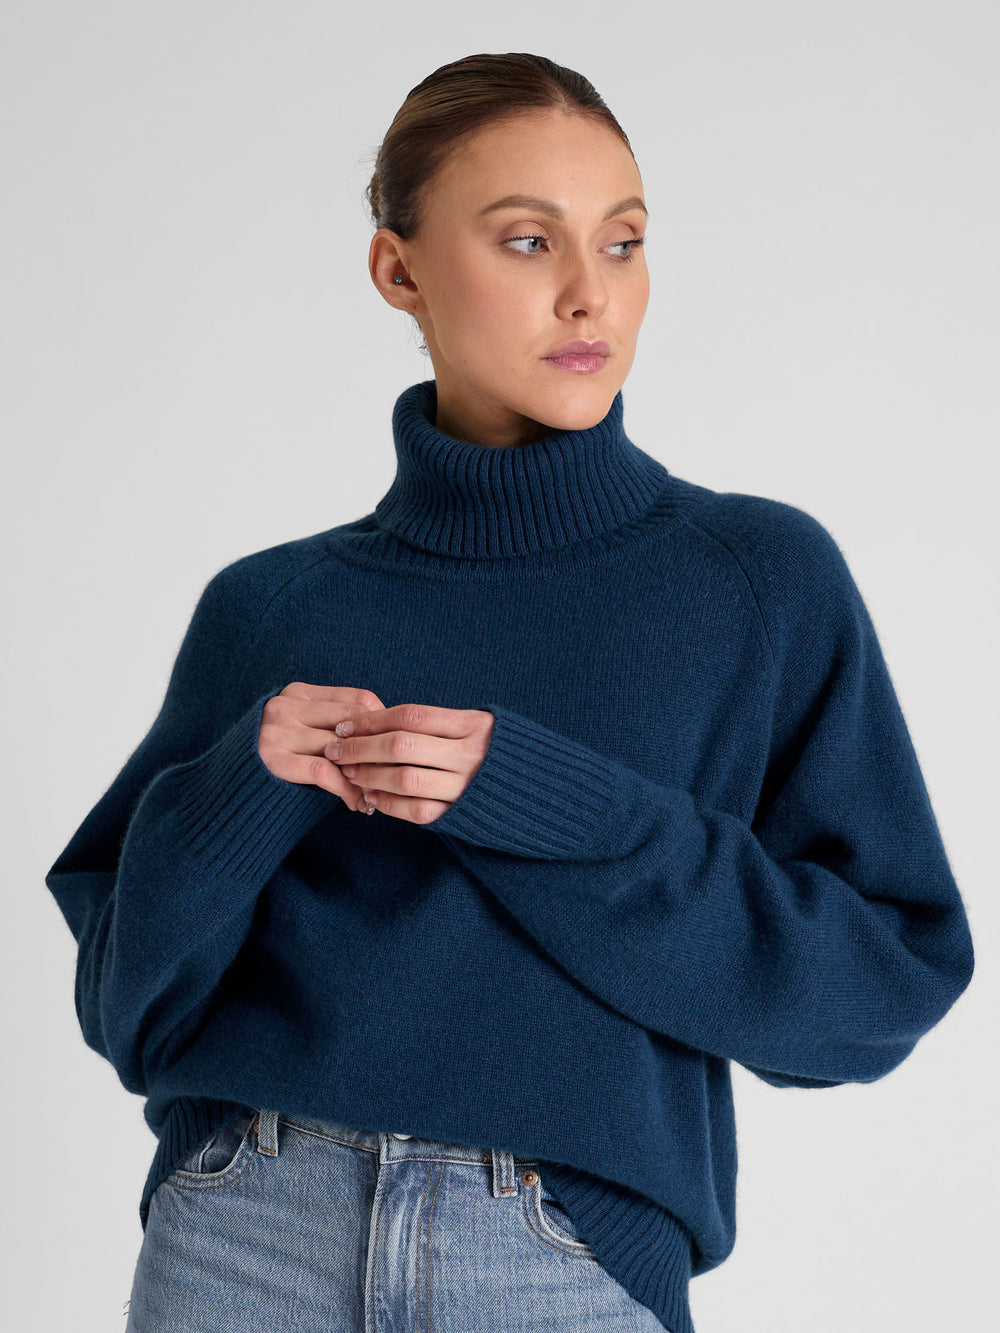 Turtle neck cashmere sweater "Milano" in 100% pure cashmere. Scandinavian design by Kashmina. Color: Mountain Blue.